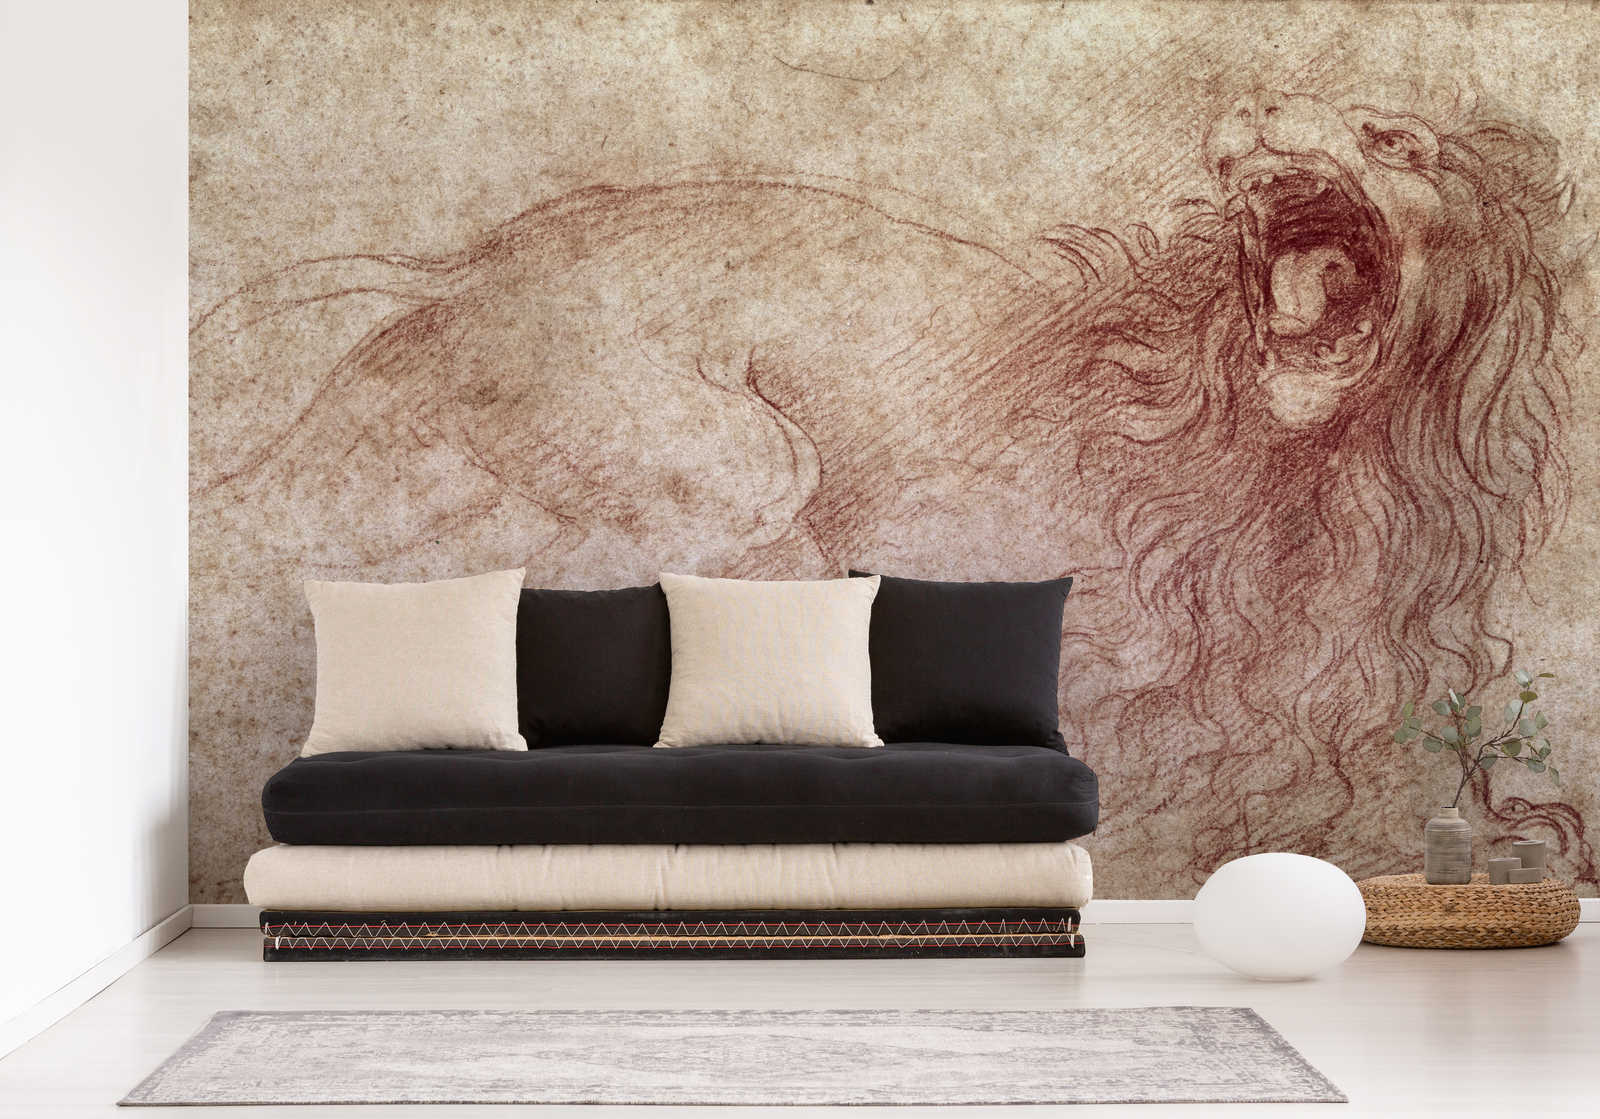             Mural "Esbozo de un león rugiente" de Leonardo da Vinci
        